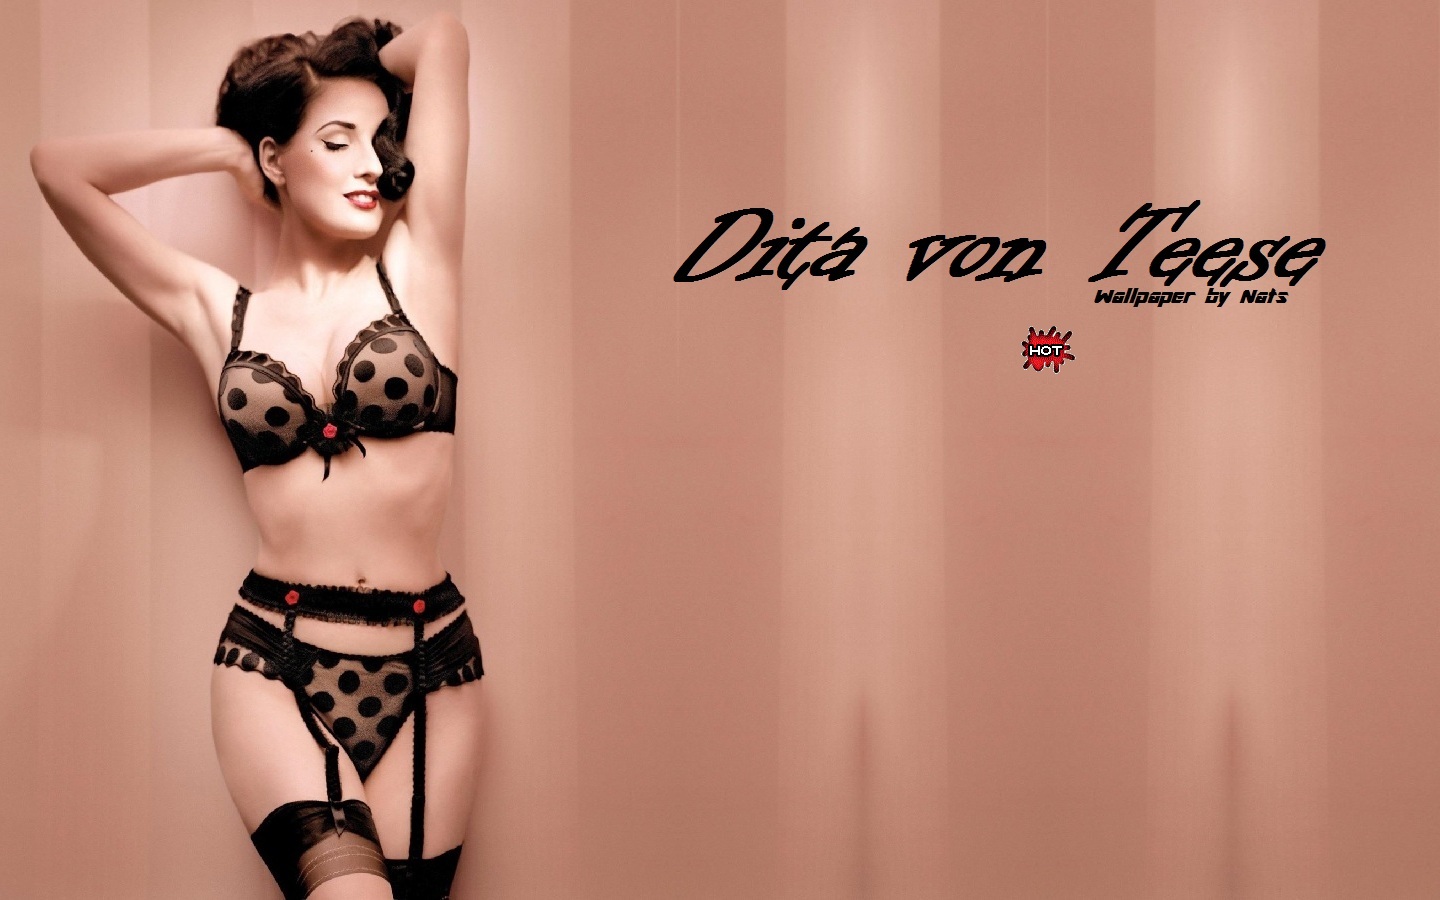 Download full size Dita Von Teese wallpaper / Celebrities Female / 1440x900